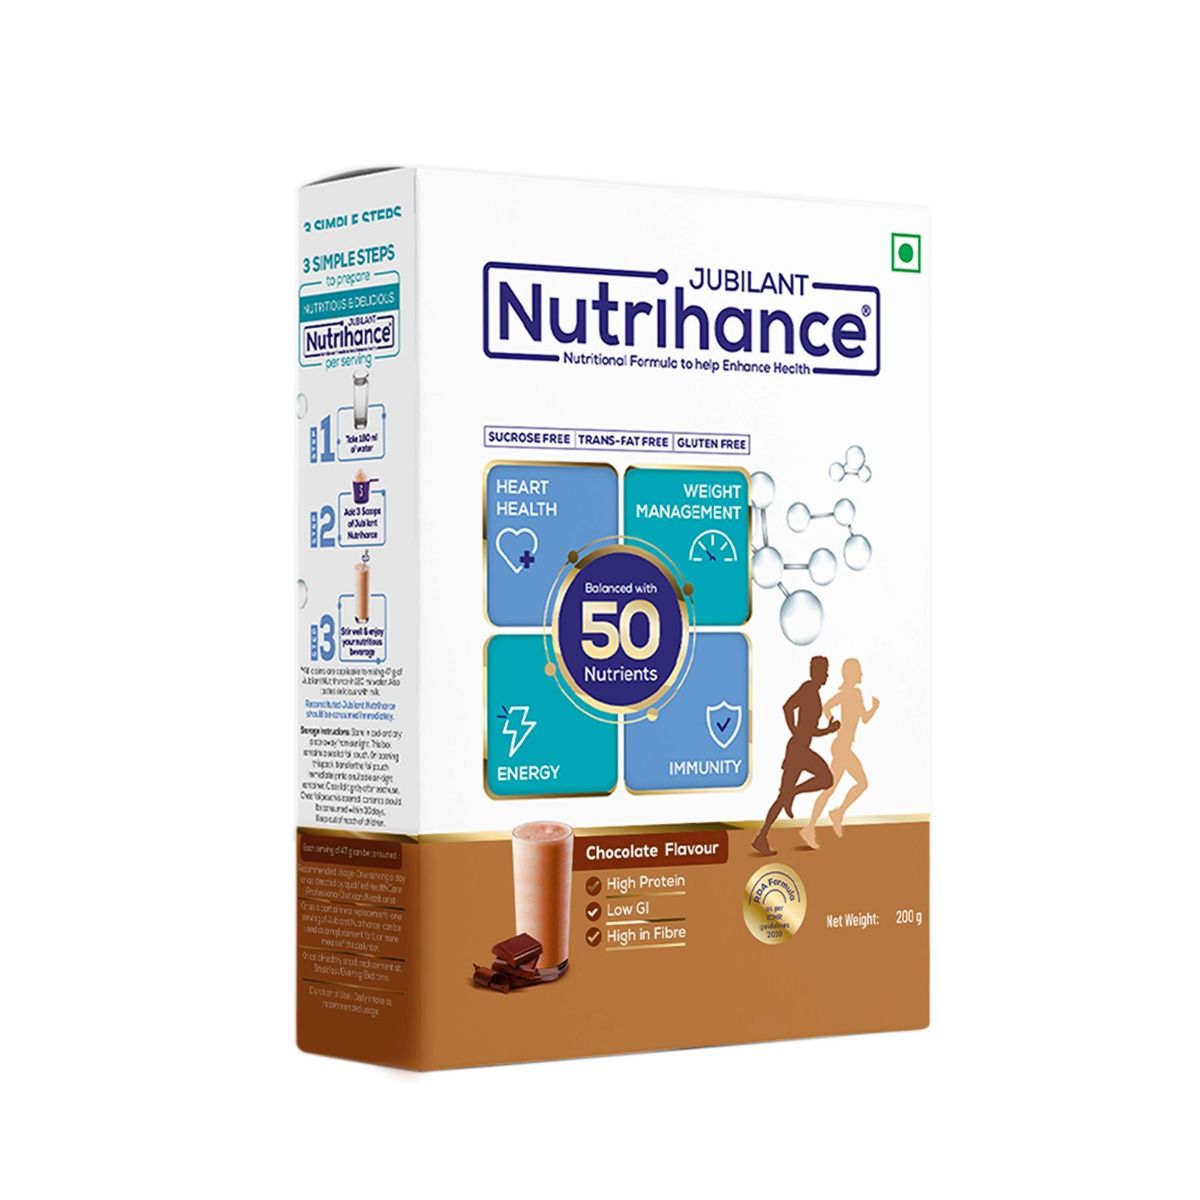 Buy Jubilant Nutrihance Chocolate Flavour Powder, 200 gm Online